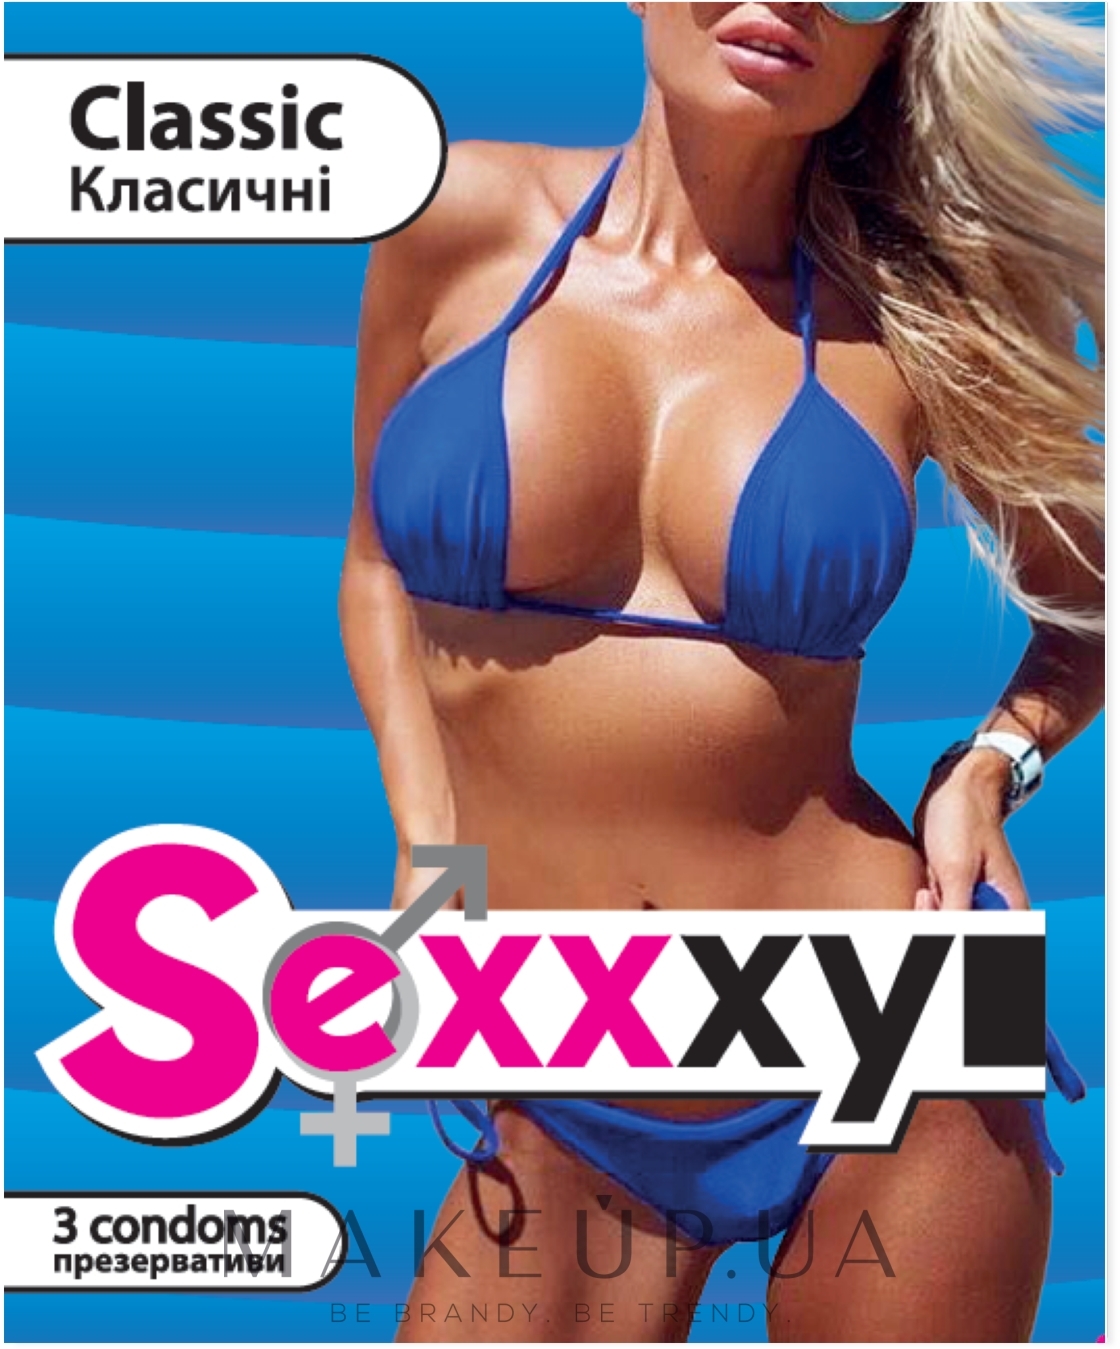 Презервативы "Classic" - Sexxxyi — фото 3шт